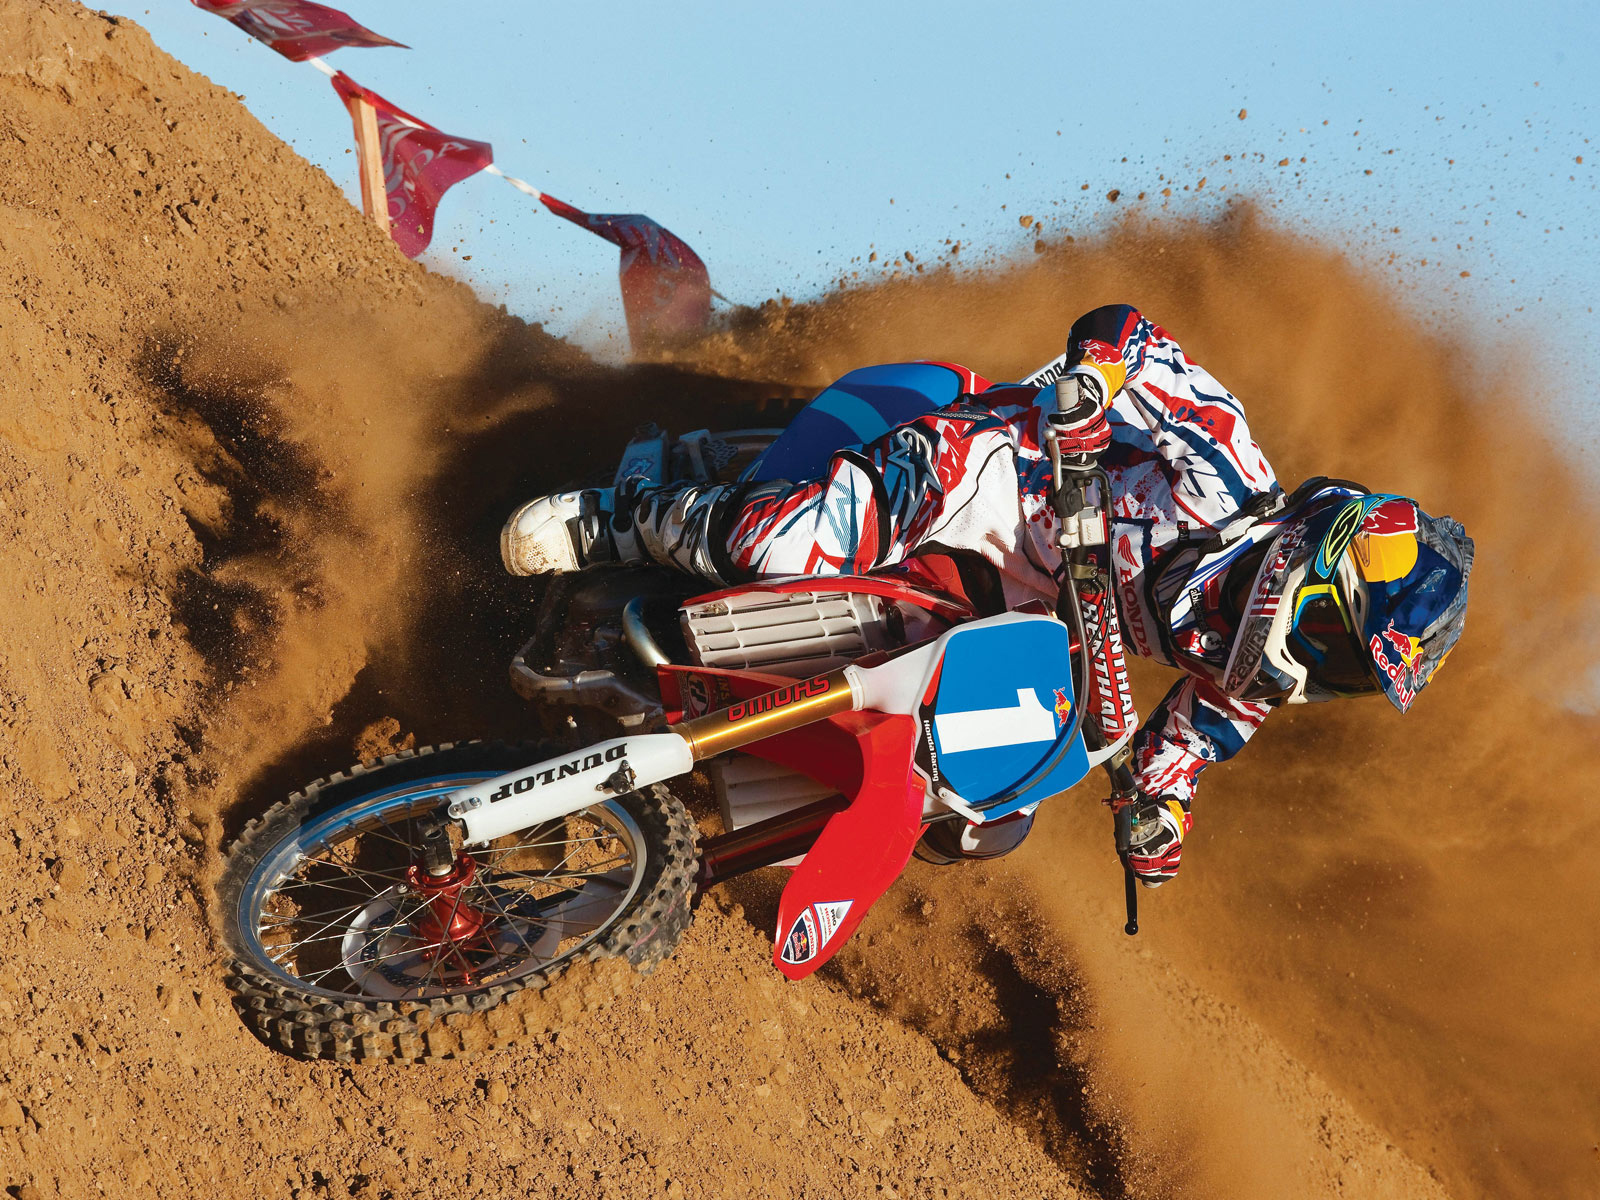 Download HQ Motocross wallpaper / Sports / 1600x1200